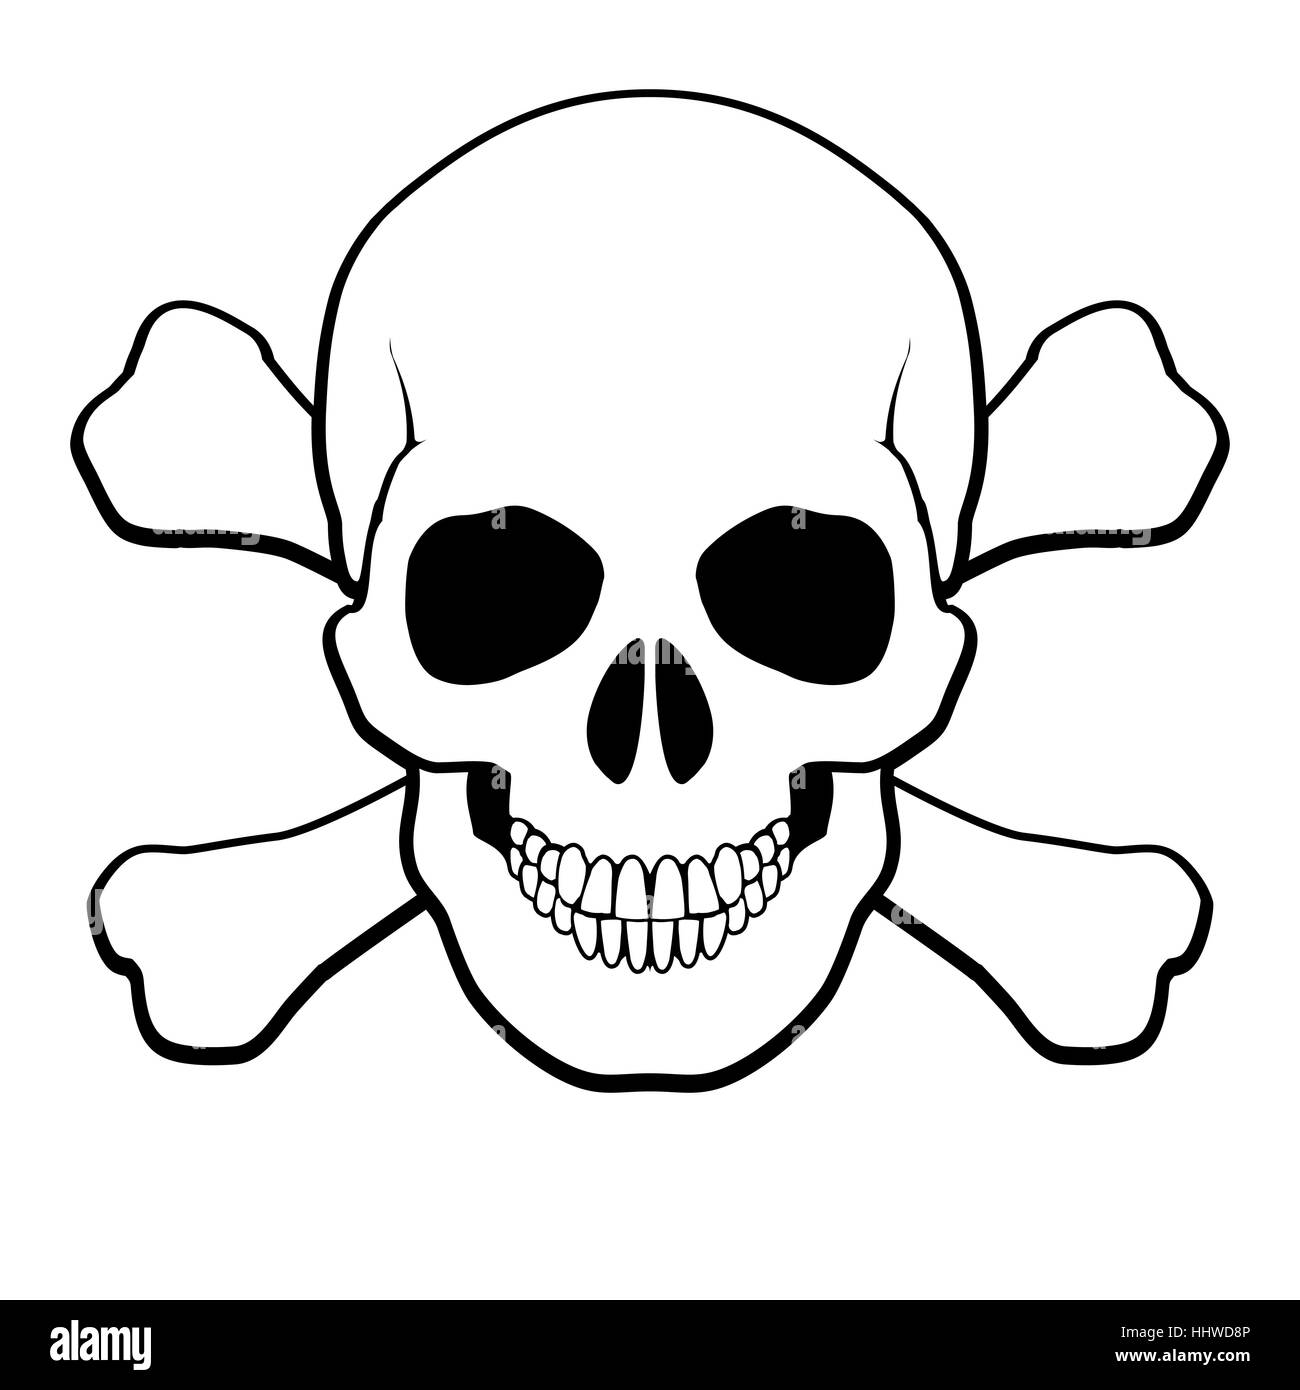 Pirate Skull and Crossbones. Illustration on white background Stock Photo